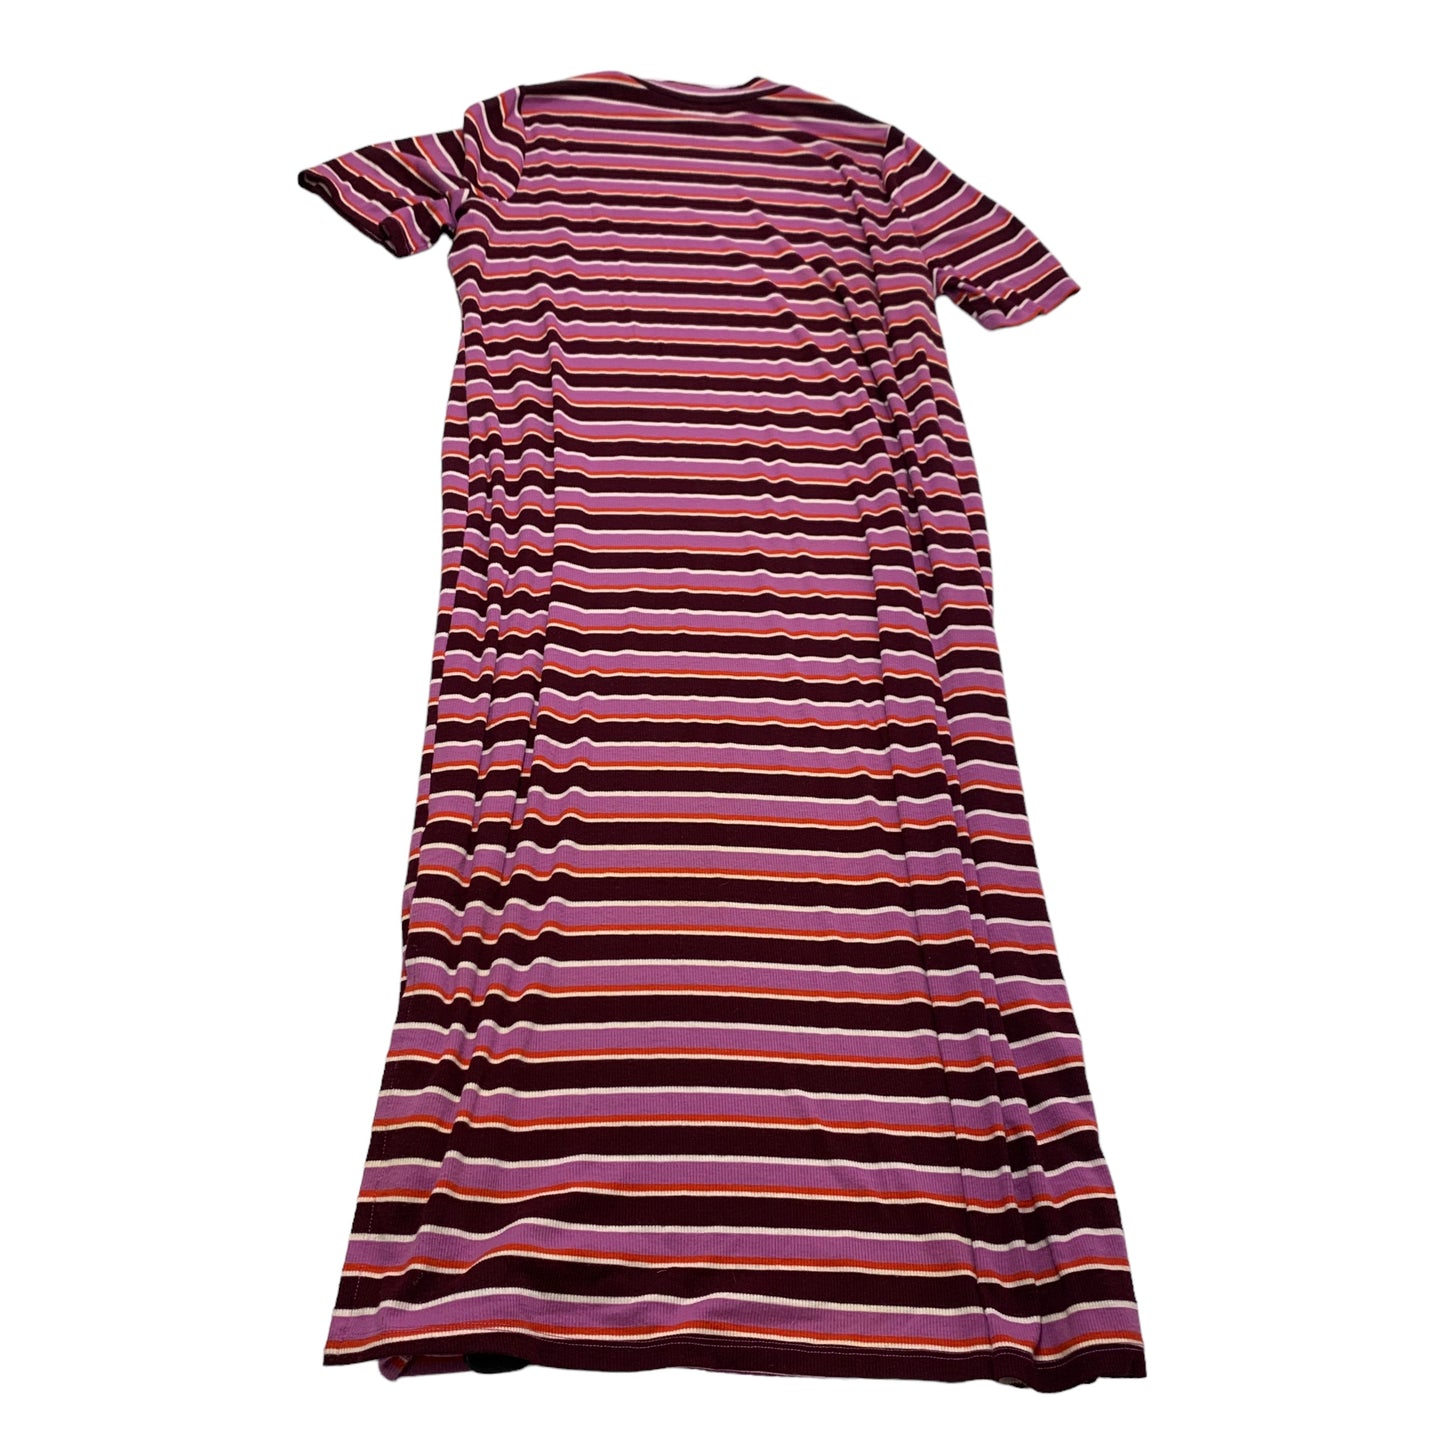 Dress Casual Maxi By Lane Bryant  Size: 1x